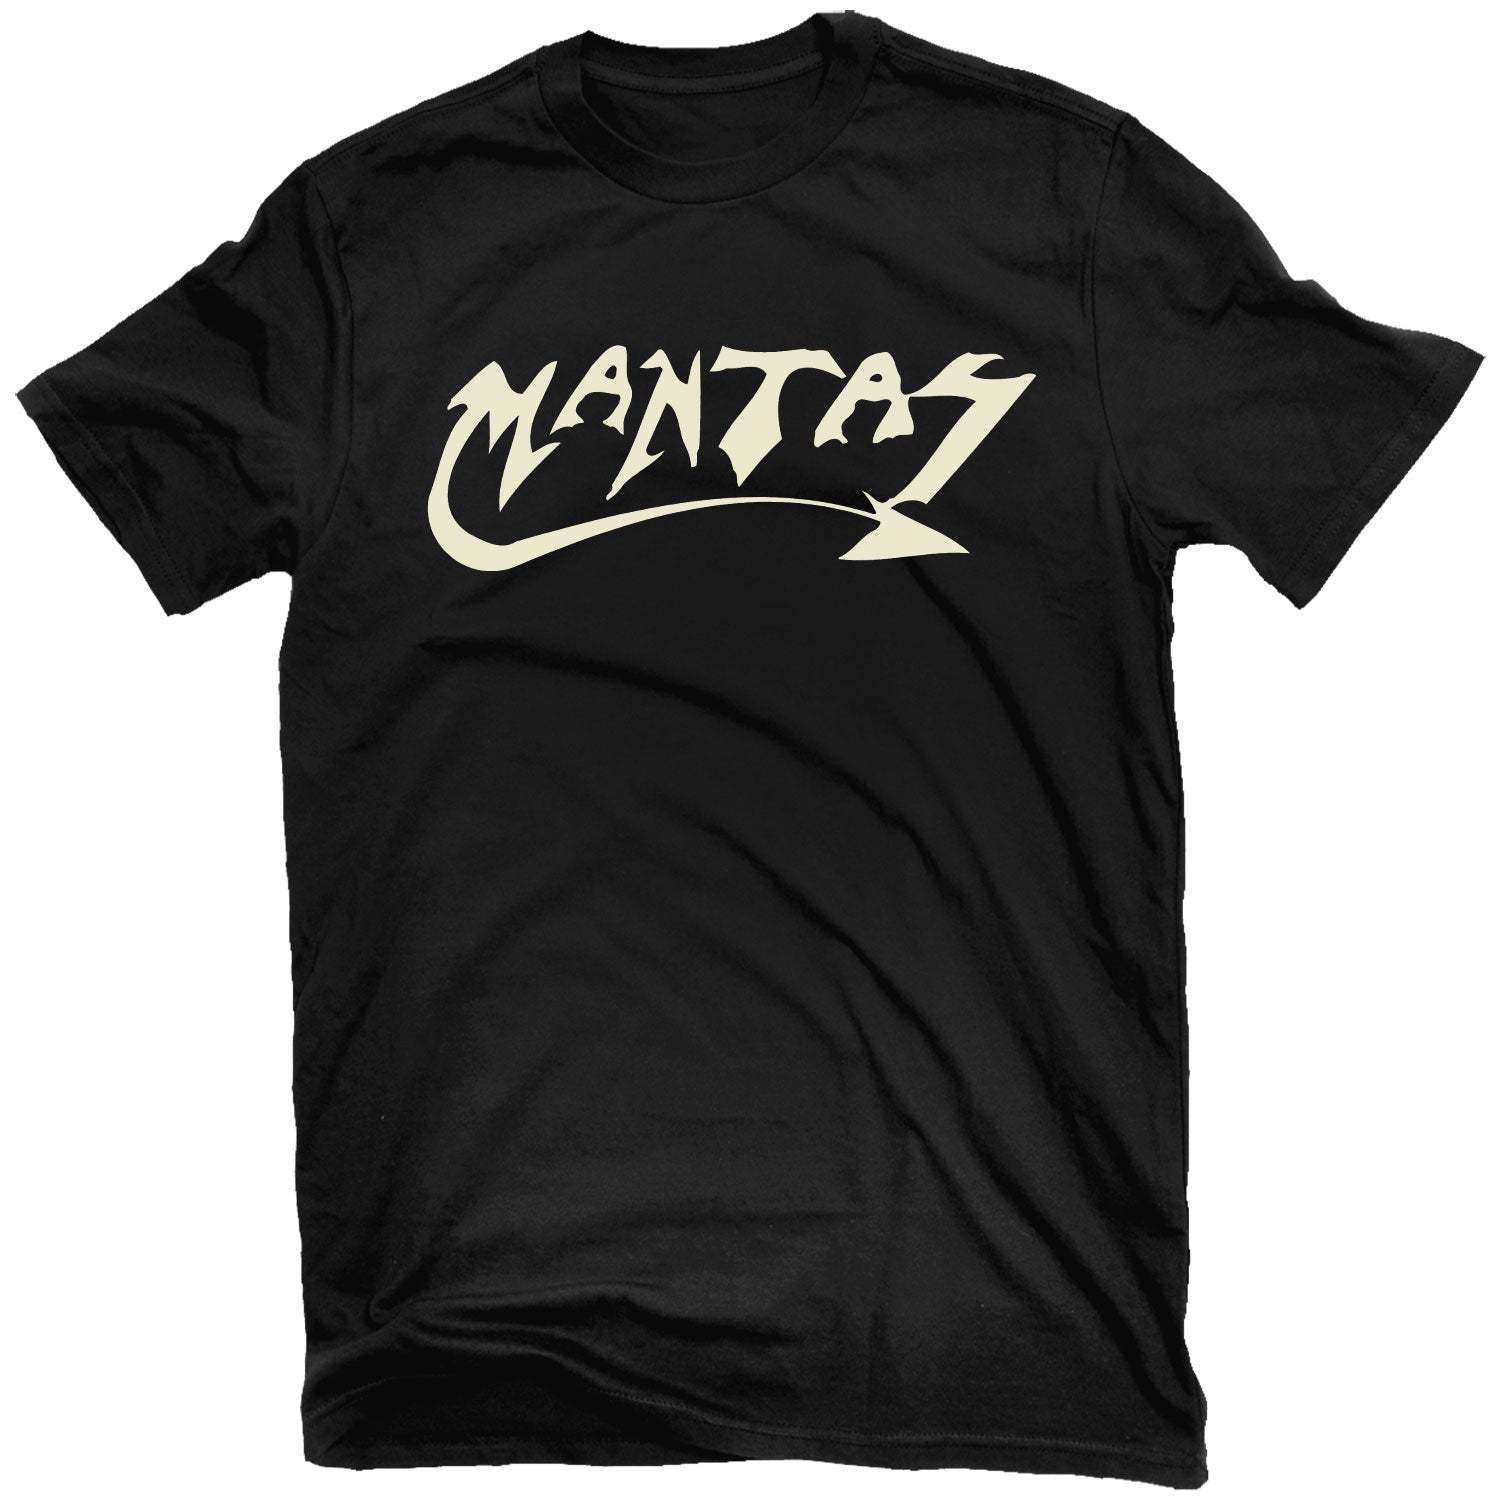 Mantas "Logo (Cream on Black)" T-Shirt